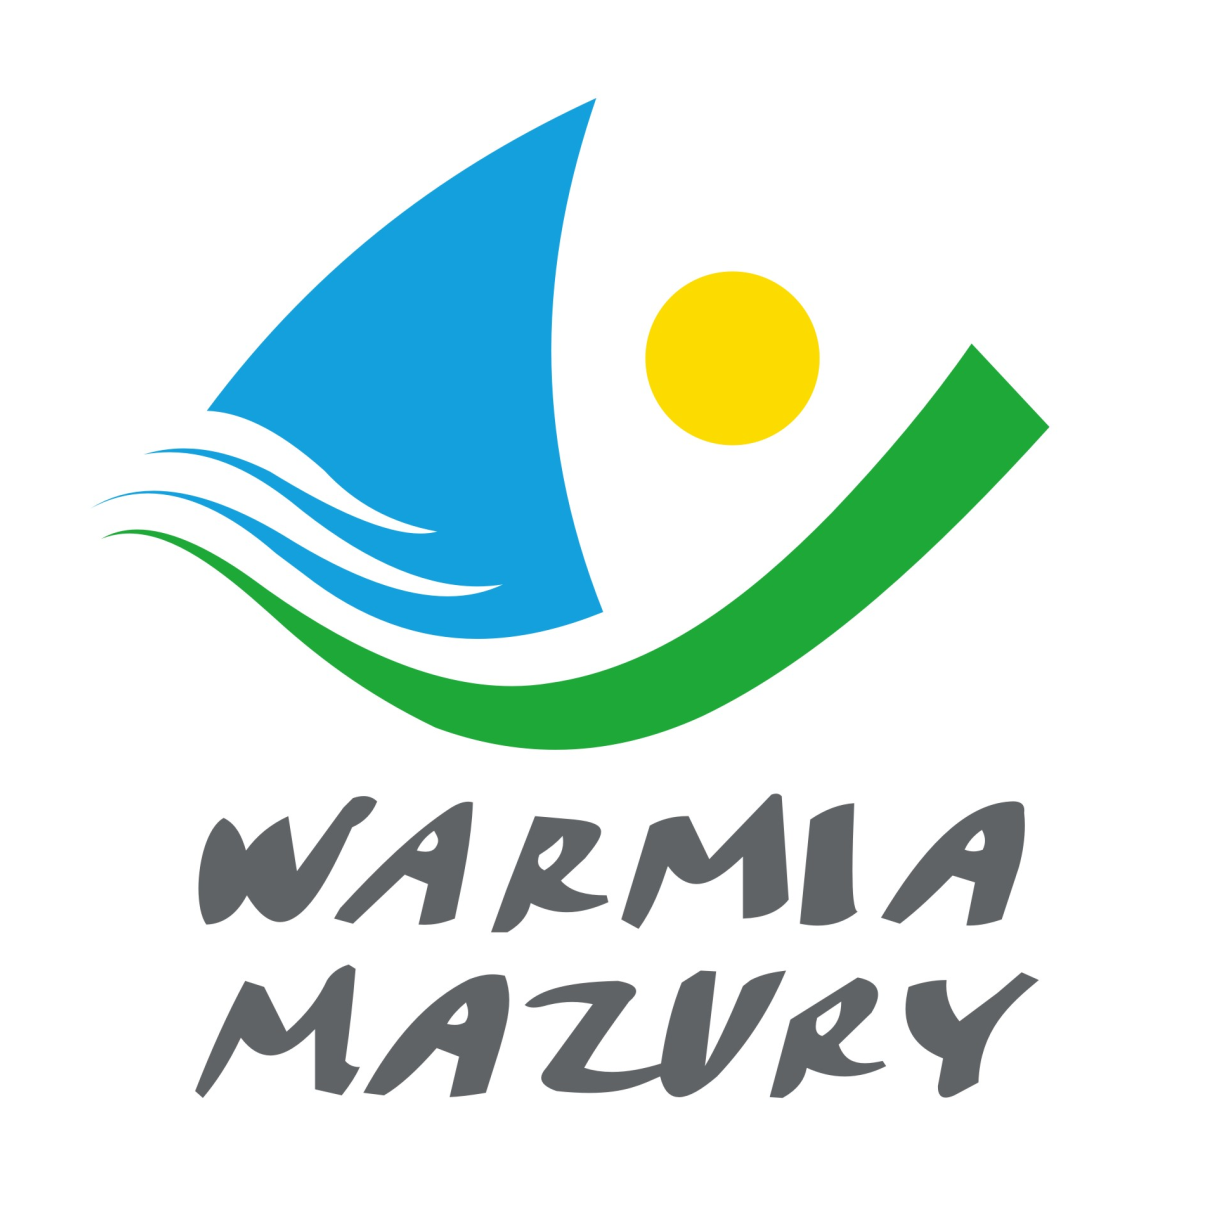 The Marshal's Office of the Warmińsko-Mazurskie Voivodeship